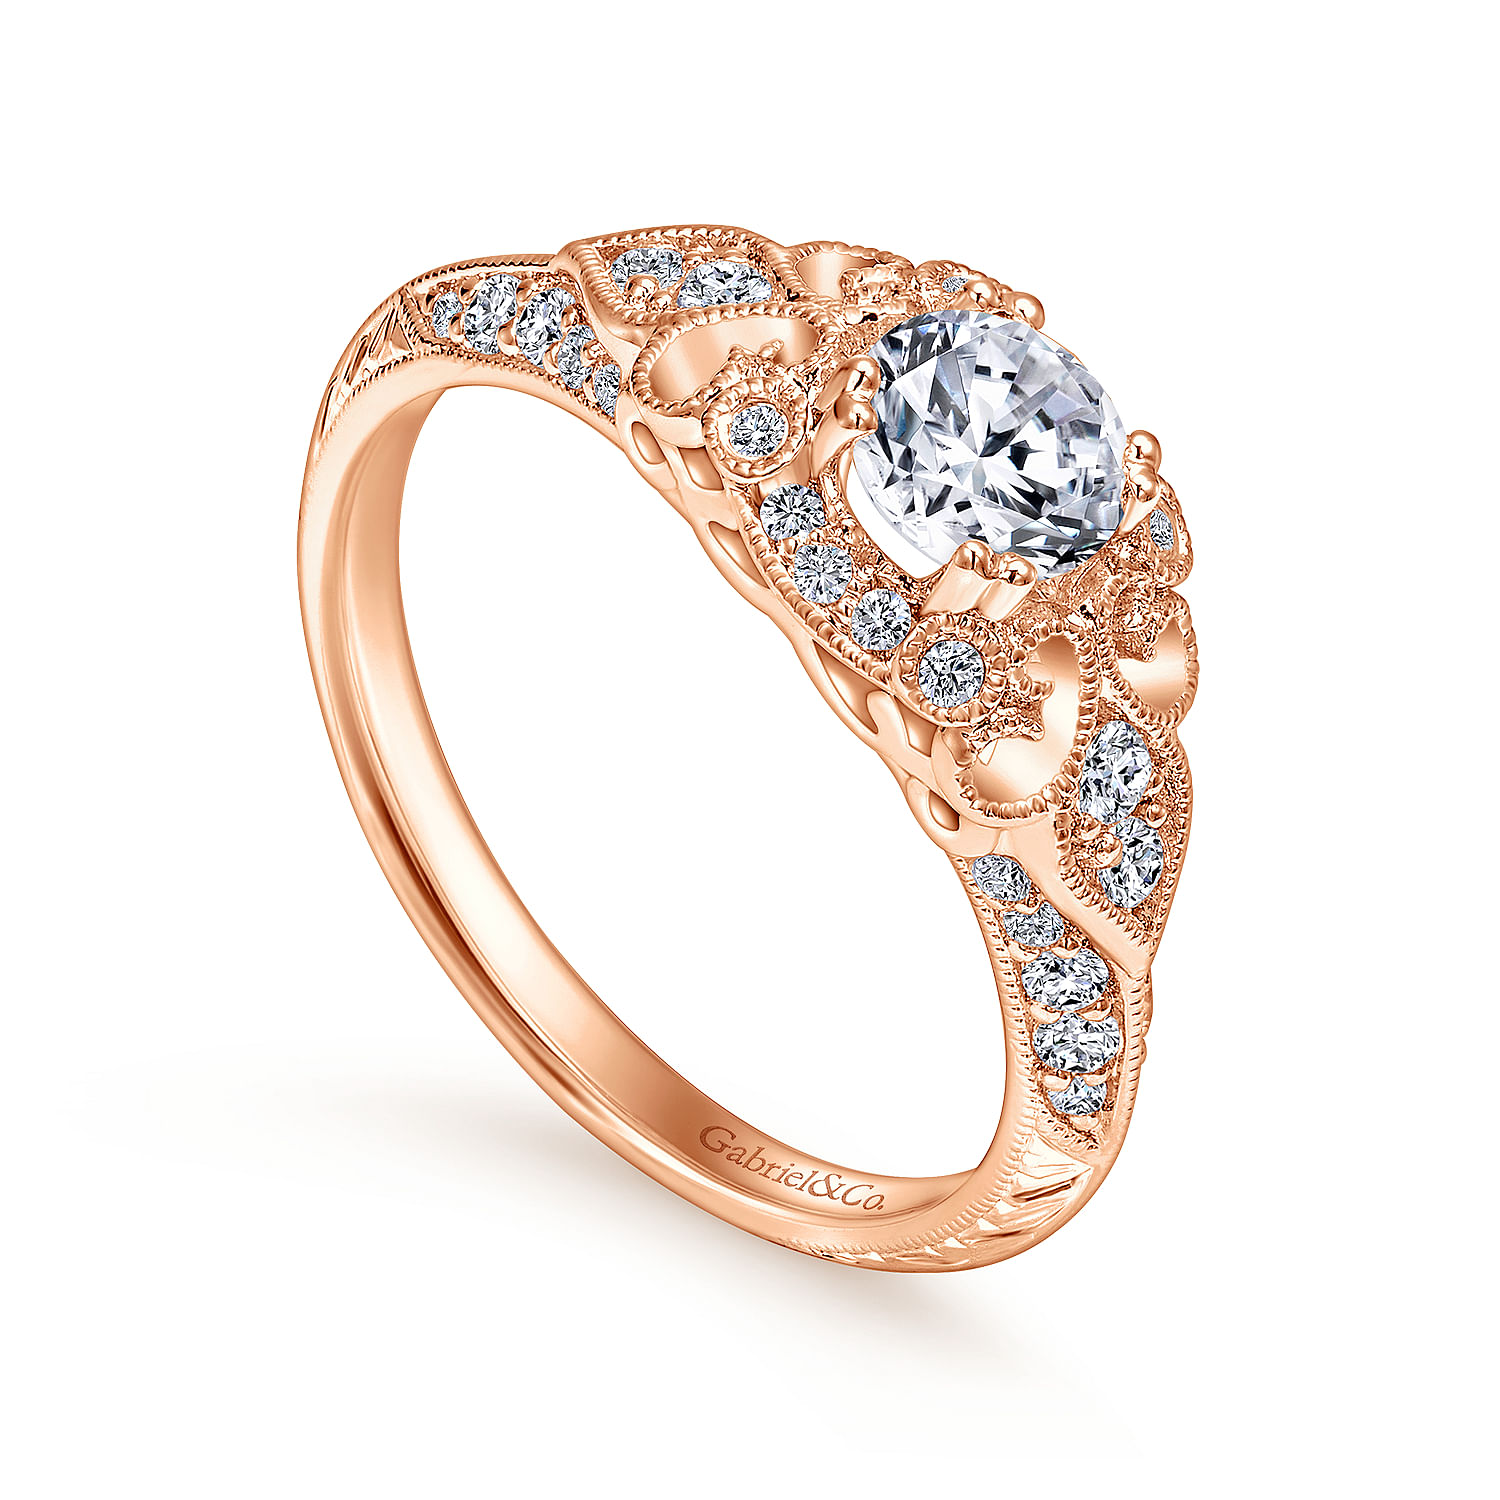 Unique 14K Rose Gold Vintage Inspired Diamond Halo Engagement Ring